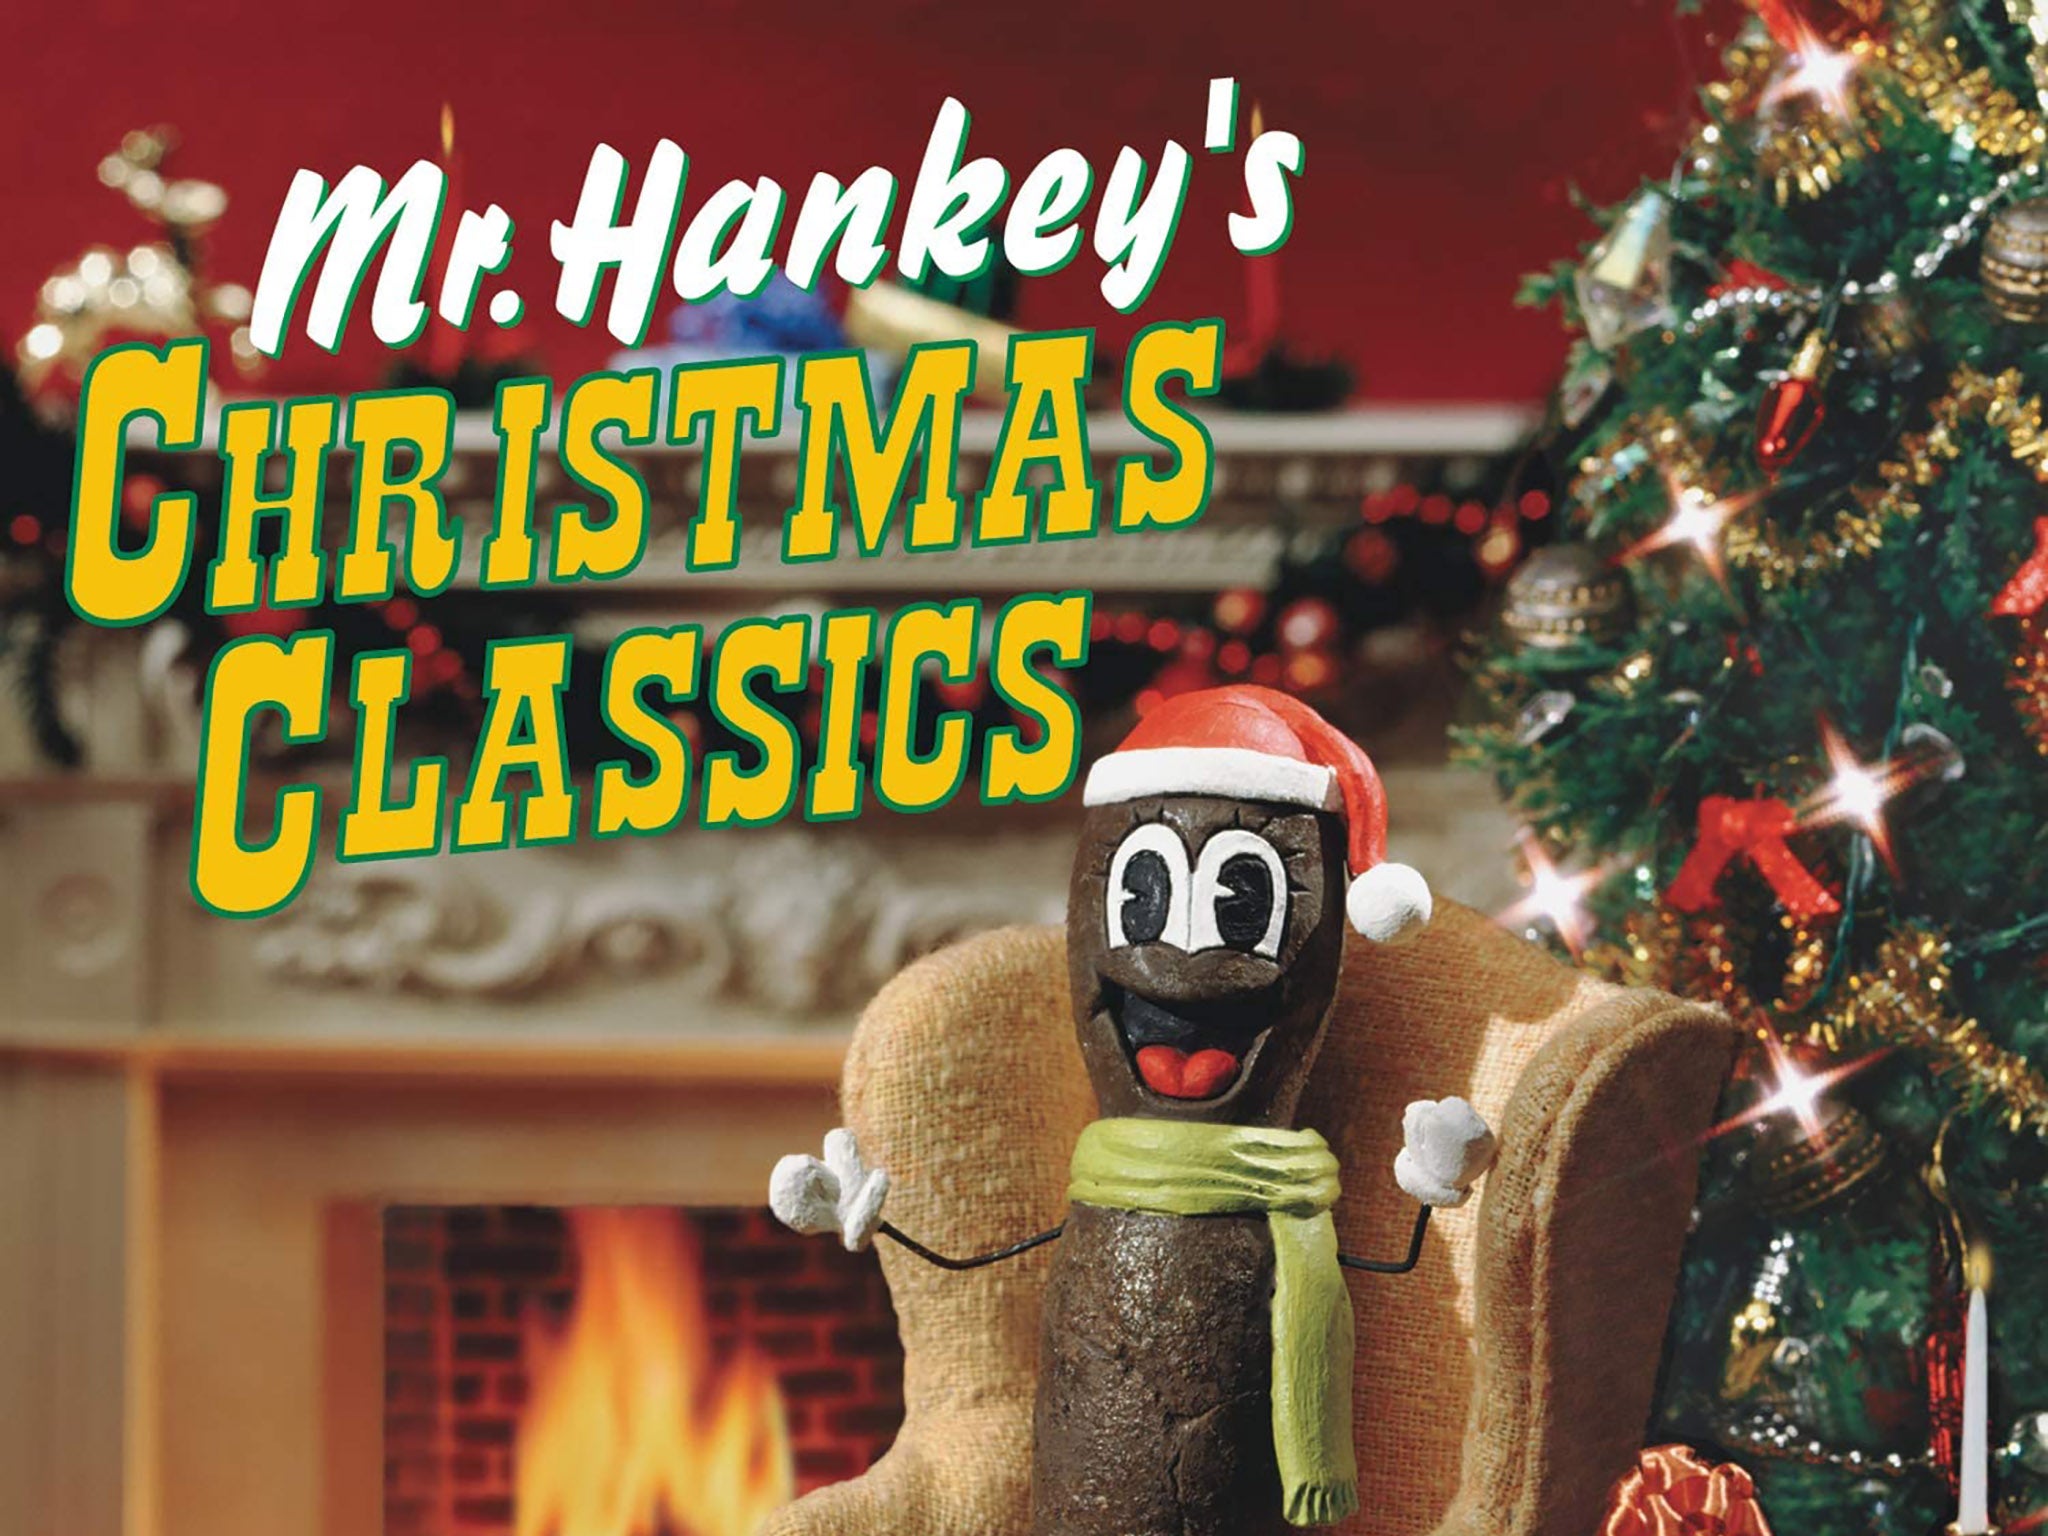 Flushing through the snow: The 1999 ‘South Park’ comedy album ‘Mr Hankey’s Christmas Classics'